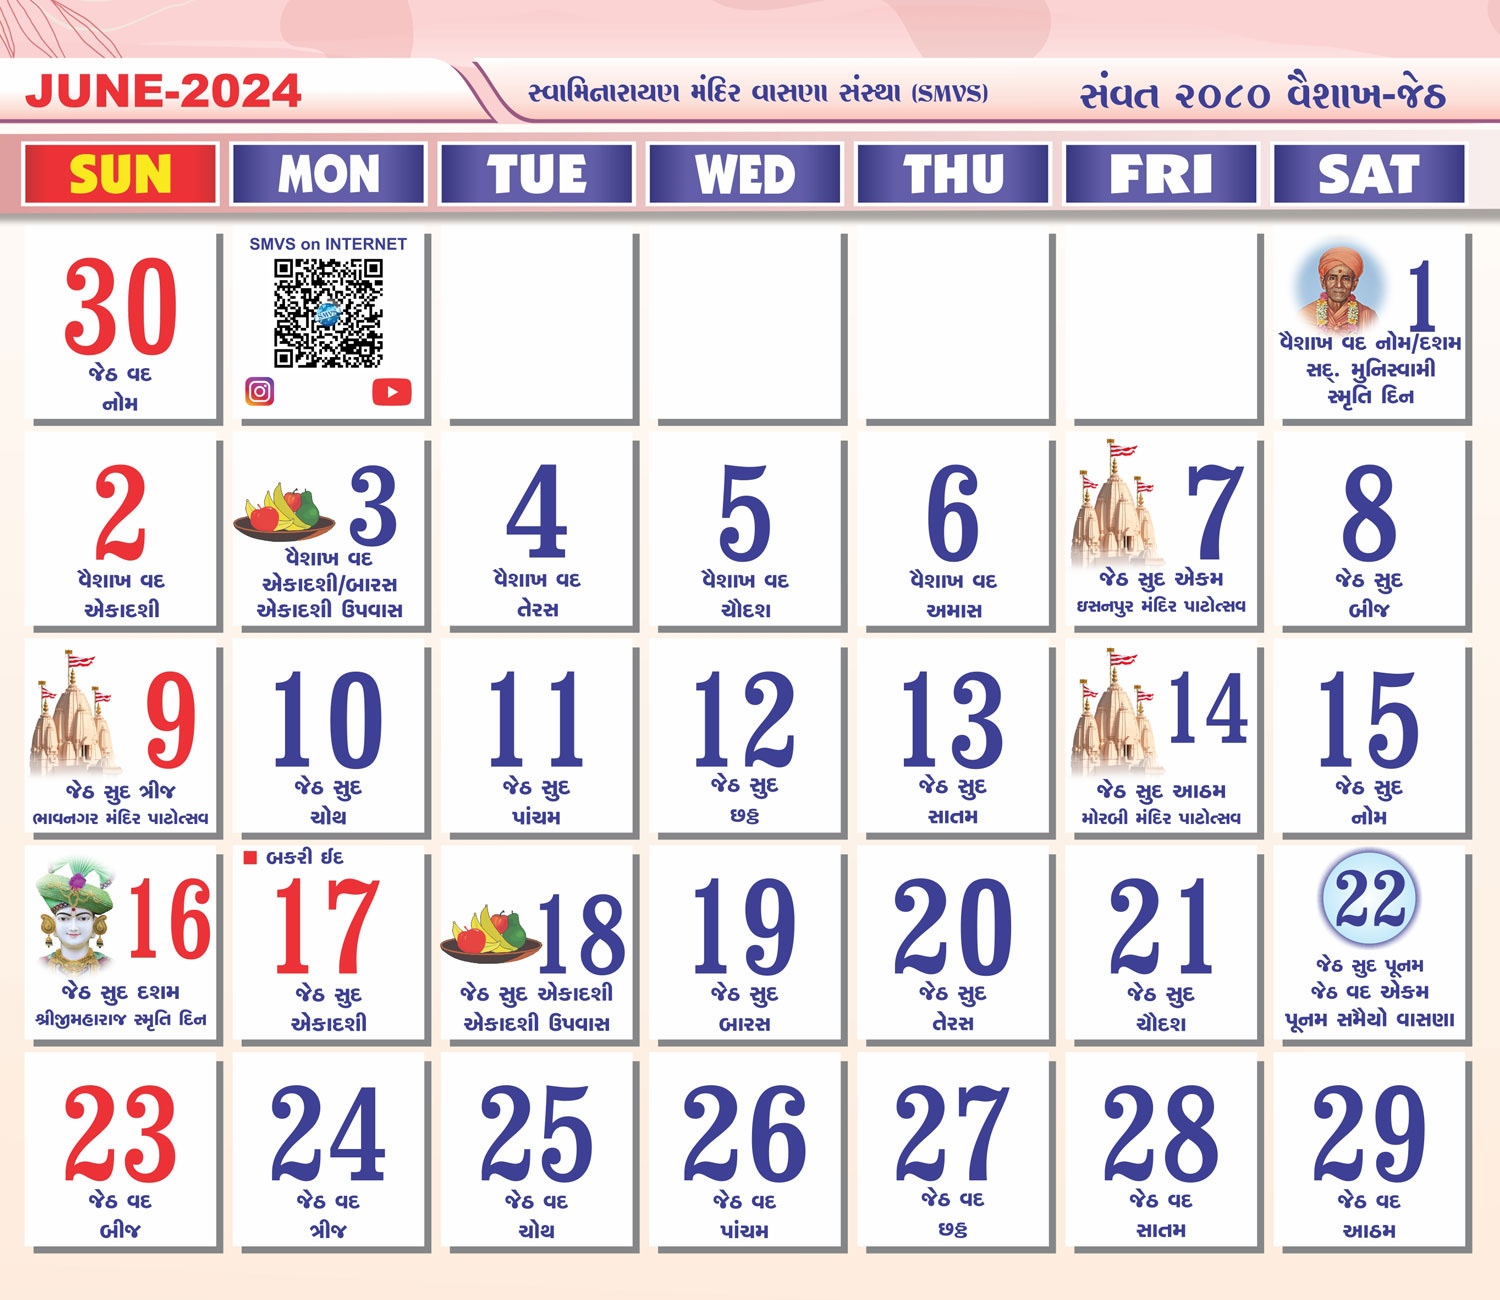 Swaminarayan Mandir Vasna Sanstha - Smvs throughout June 2024 Hindu Calendar